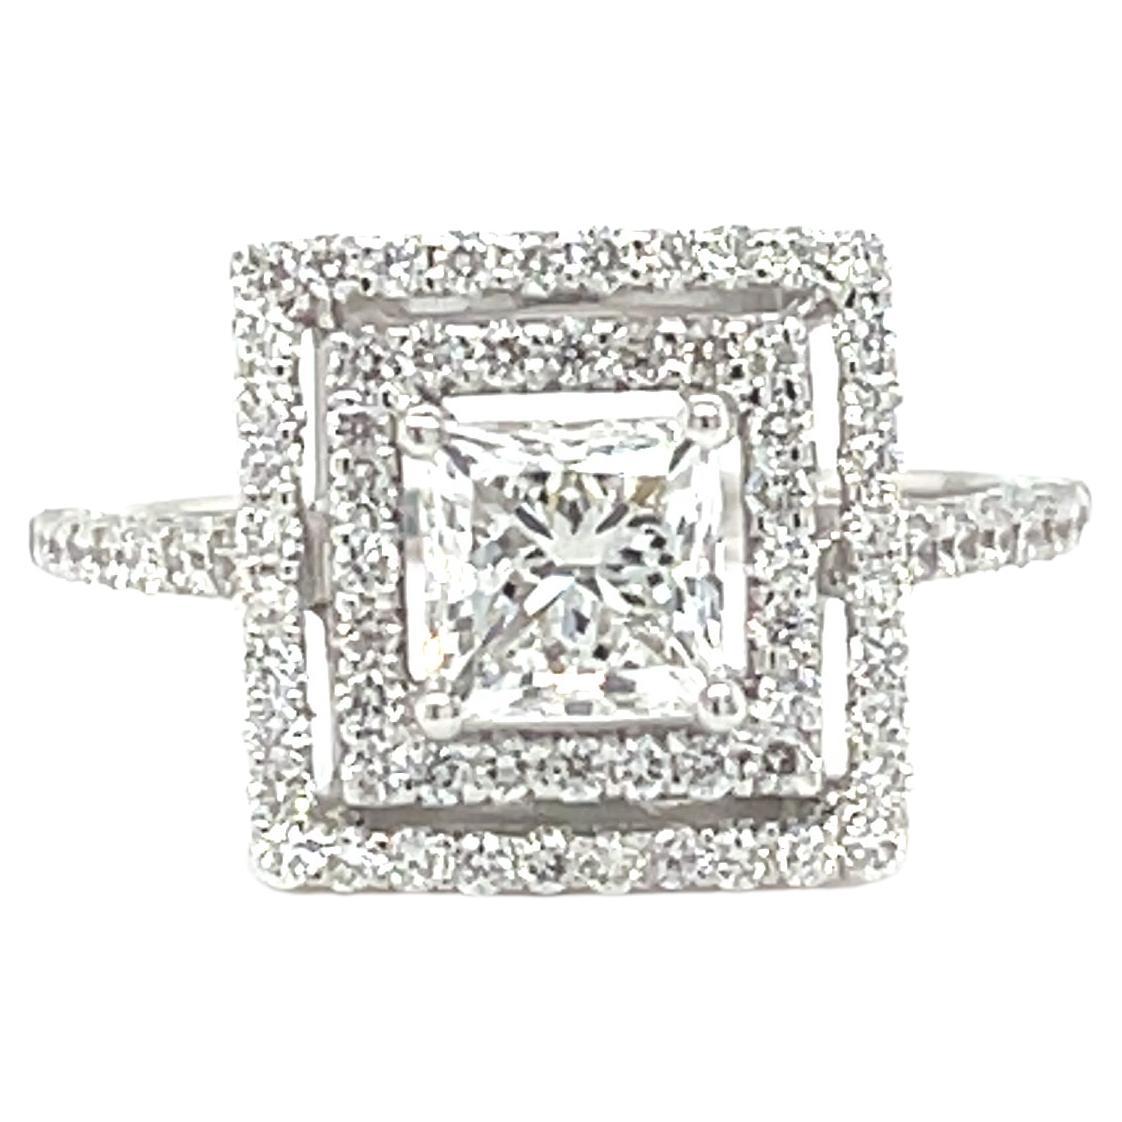 GIA Certified Princess Cut 1.01 Carat F VVS2 Diamond Ring in 18K White Gold For Sale